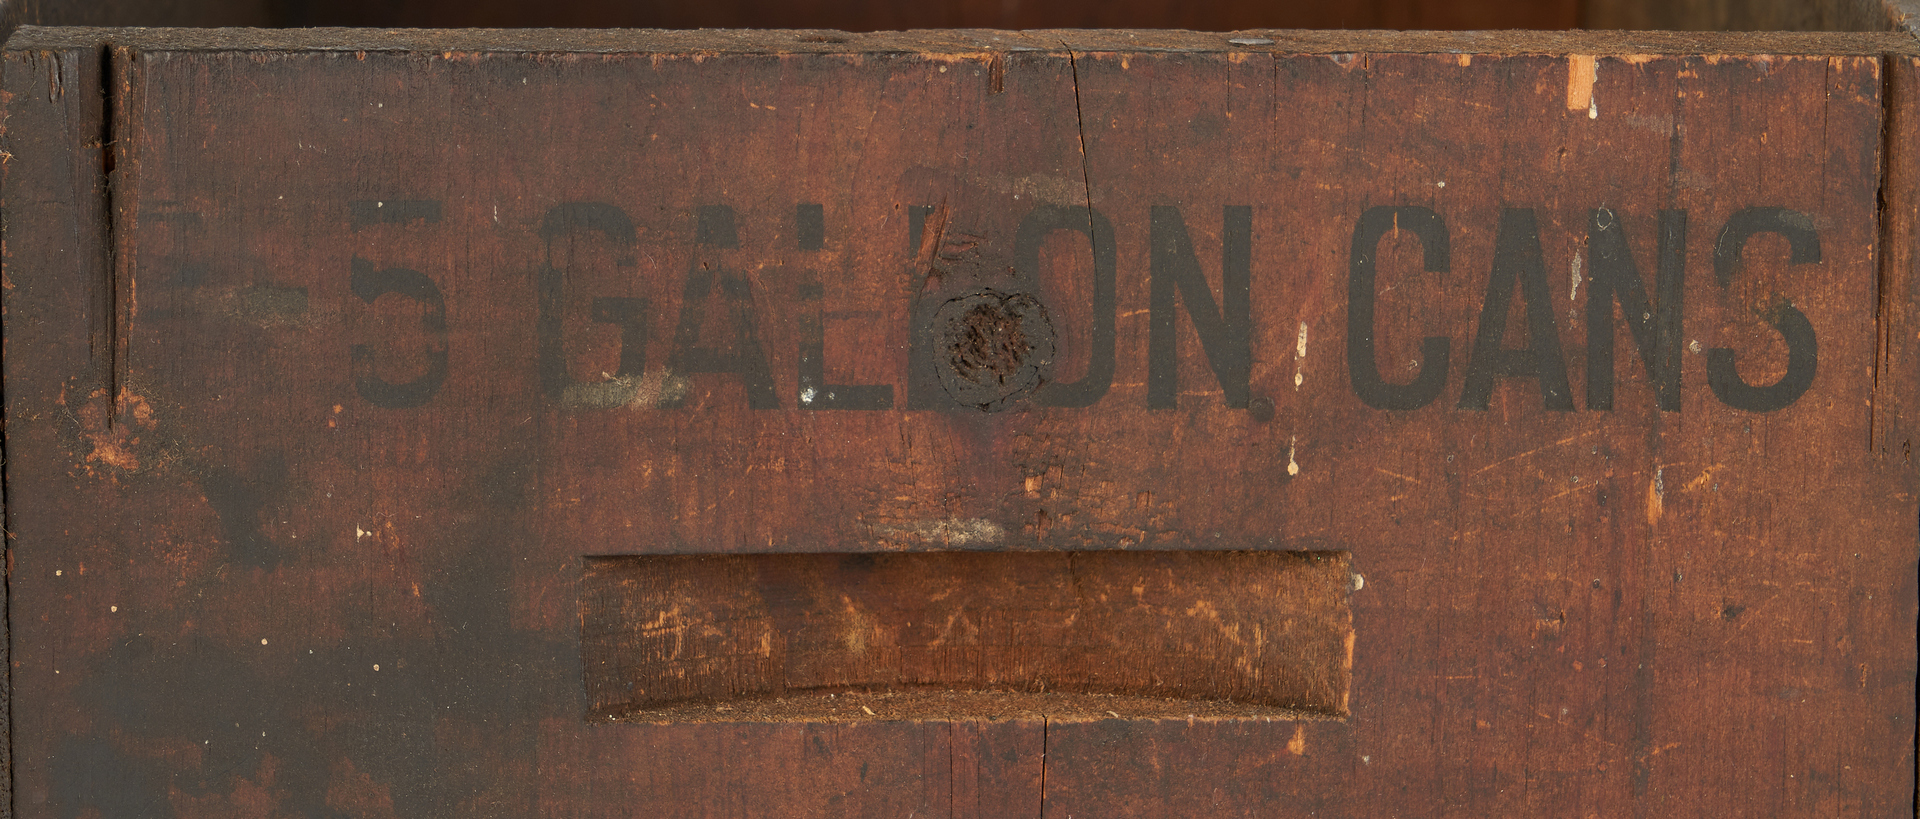 Lot 1177: 2 Havoline 5-Gallon Oil Cans & Crate